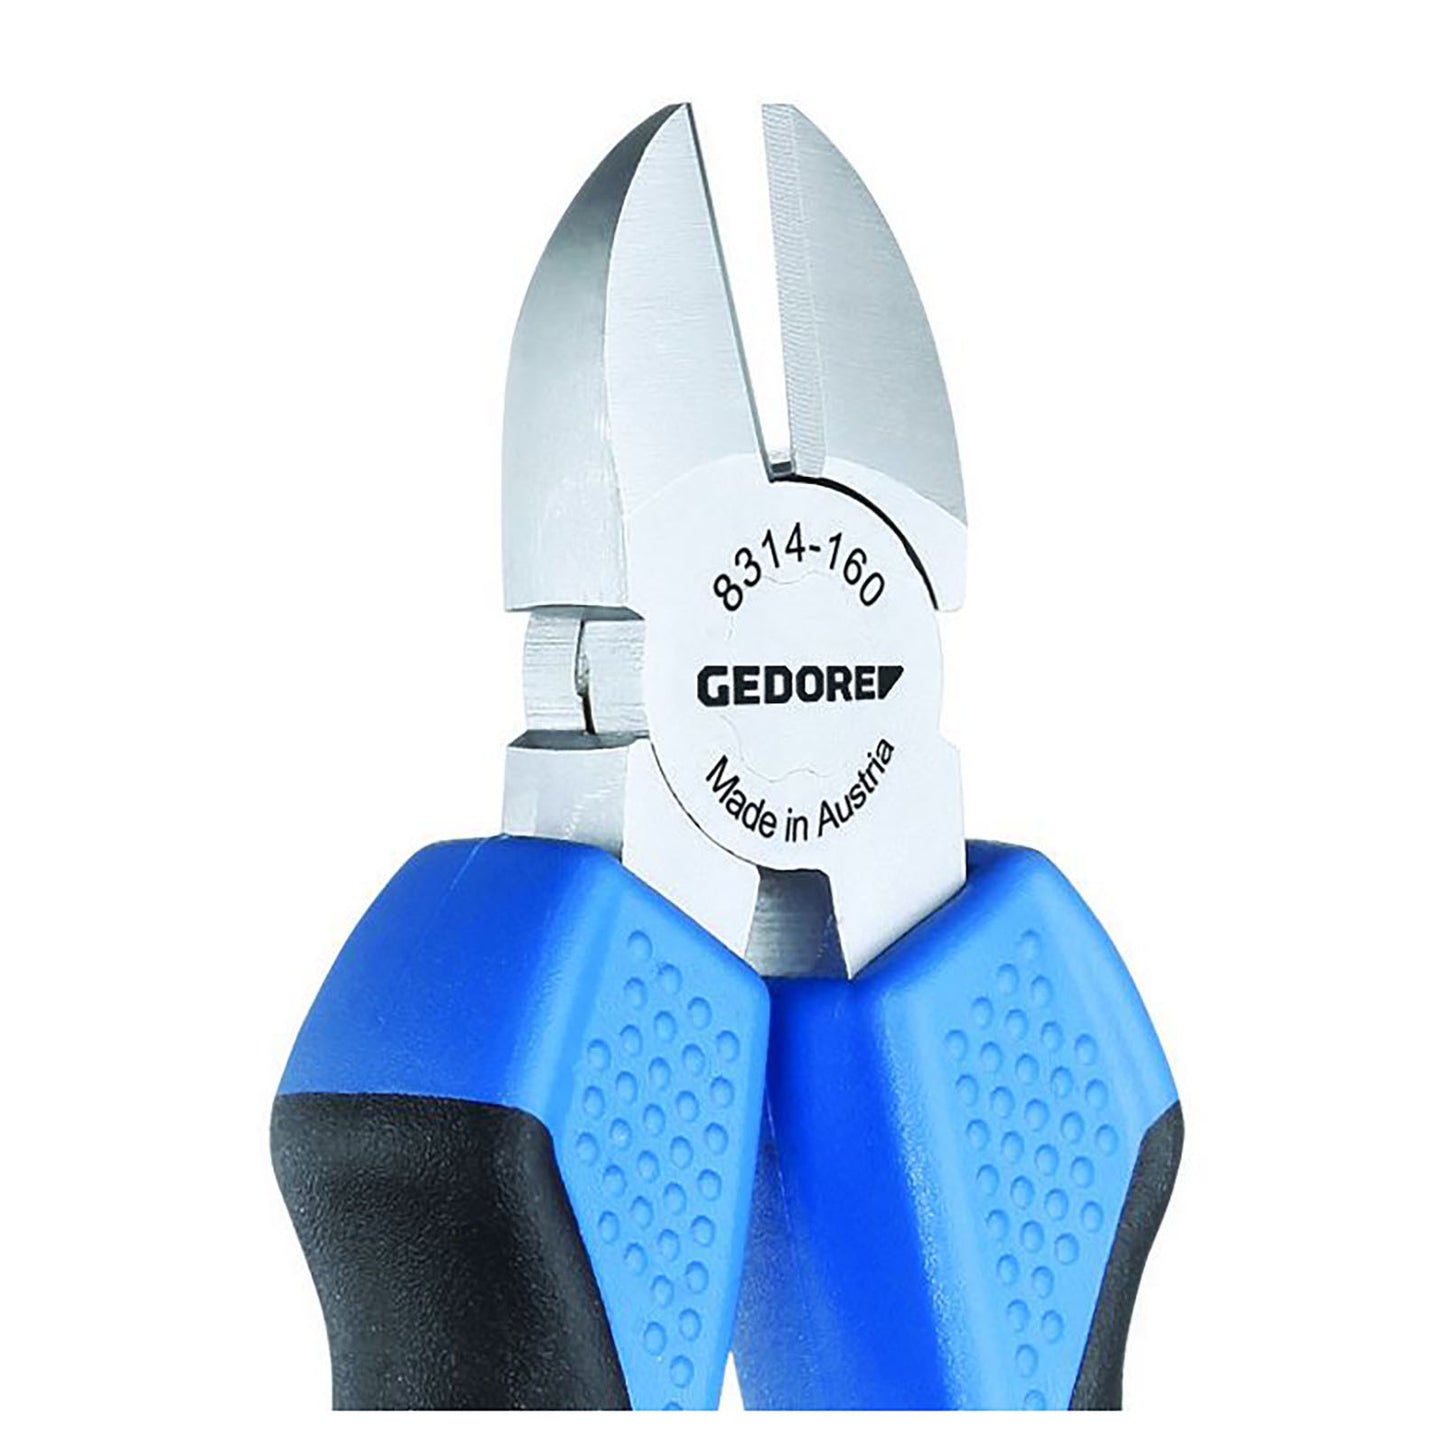 GEDORE 8314-125 TL - Pince coupante diagonale 125 mm (6740870)